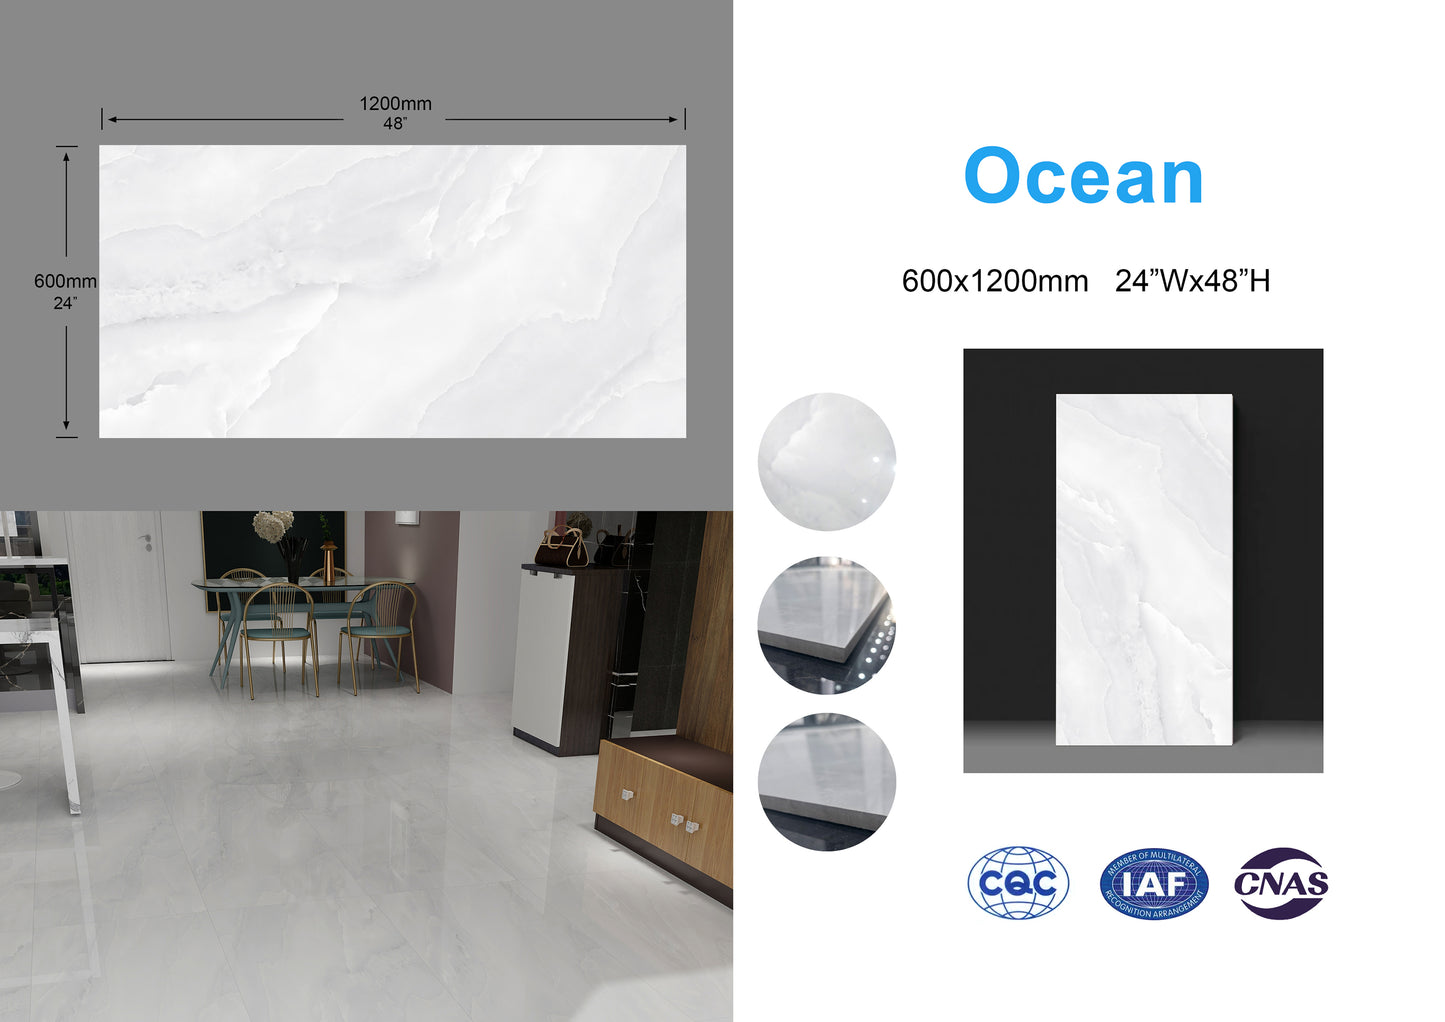 Ocean family Full Polished Glazed Tile light gray 24"x48" 3pcs/box 24sf/box $1.59/sf (15 days return/exchange) Bulk Deal 2000sf+ $1.39/SF(No return/no exchange)